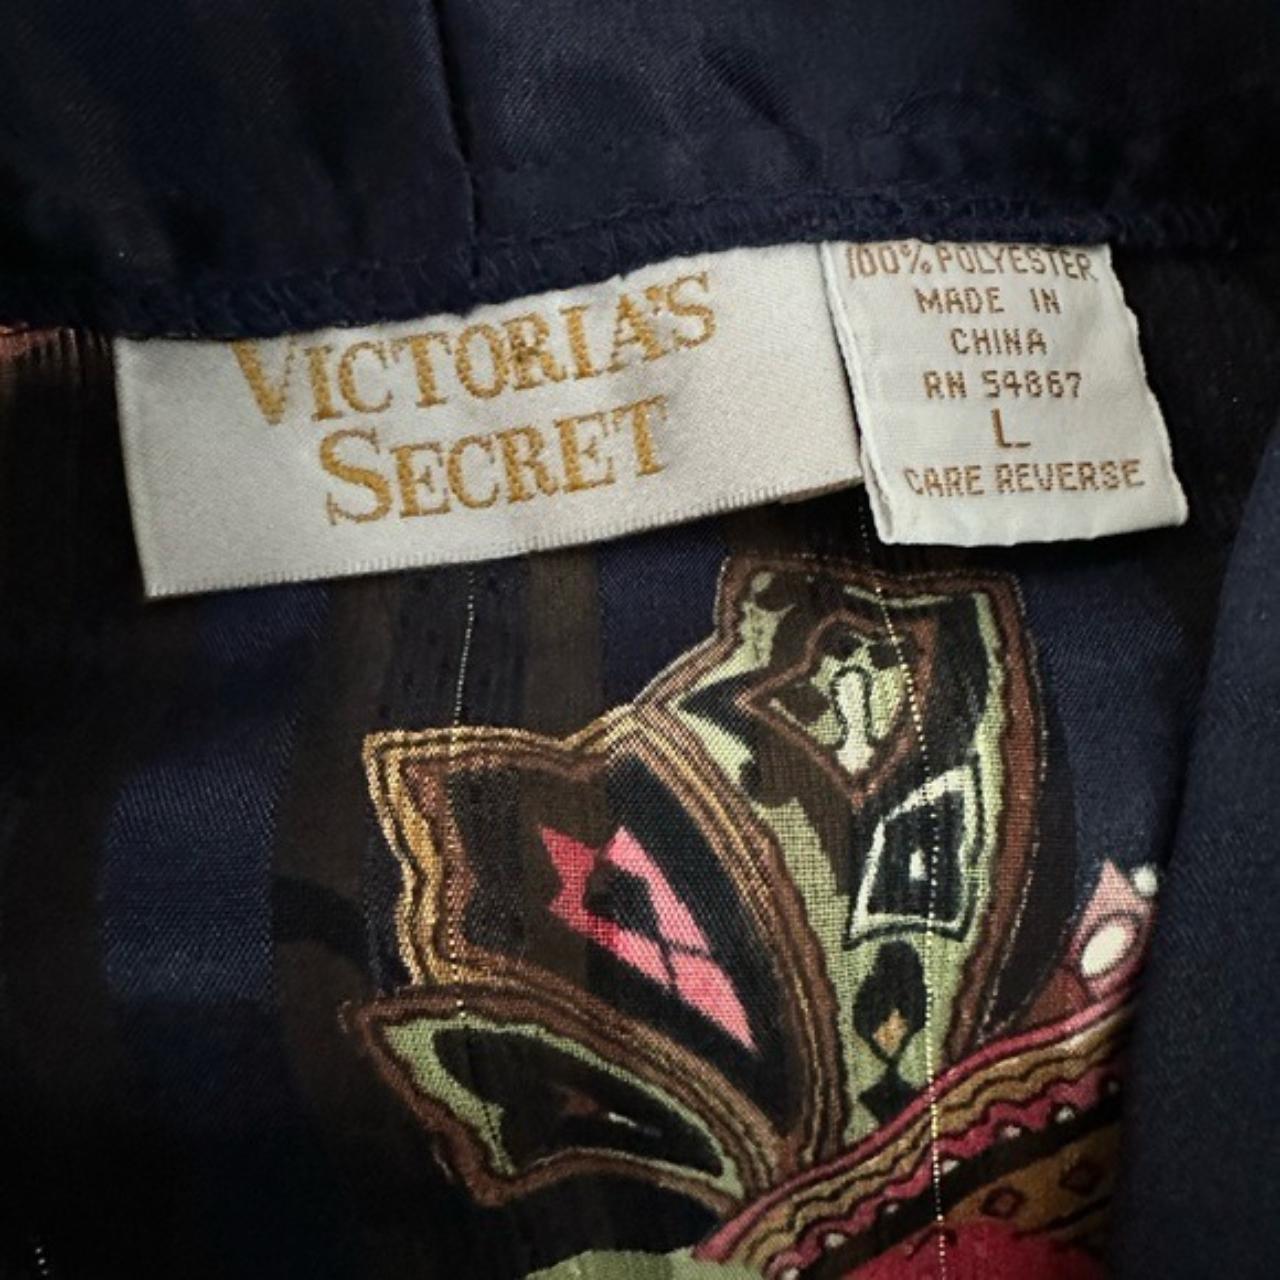 Vintage Victoria’s Secret Gold Label Paisley Silk 2... - Depop